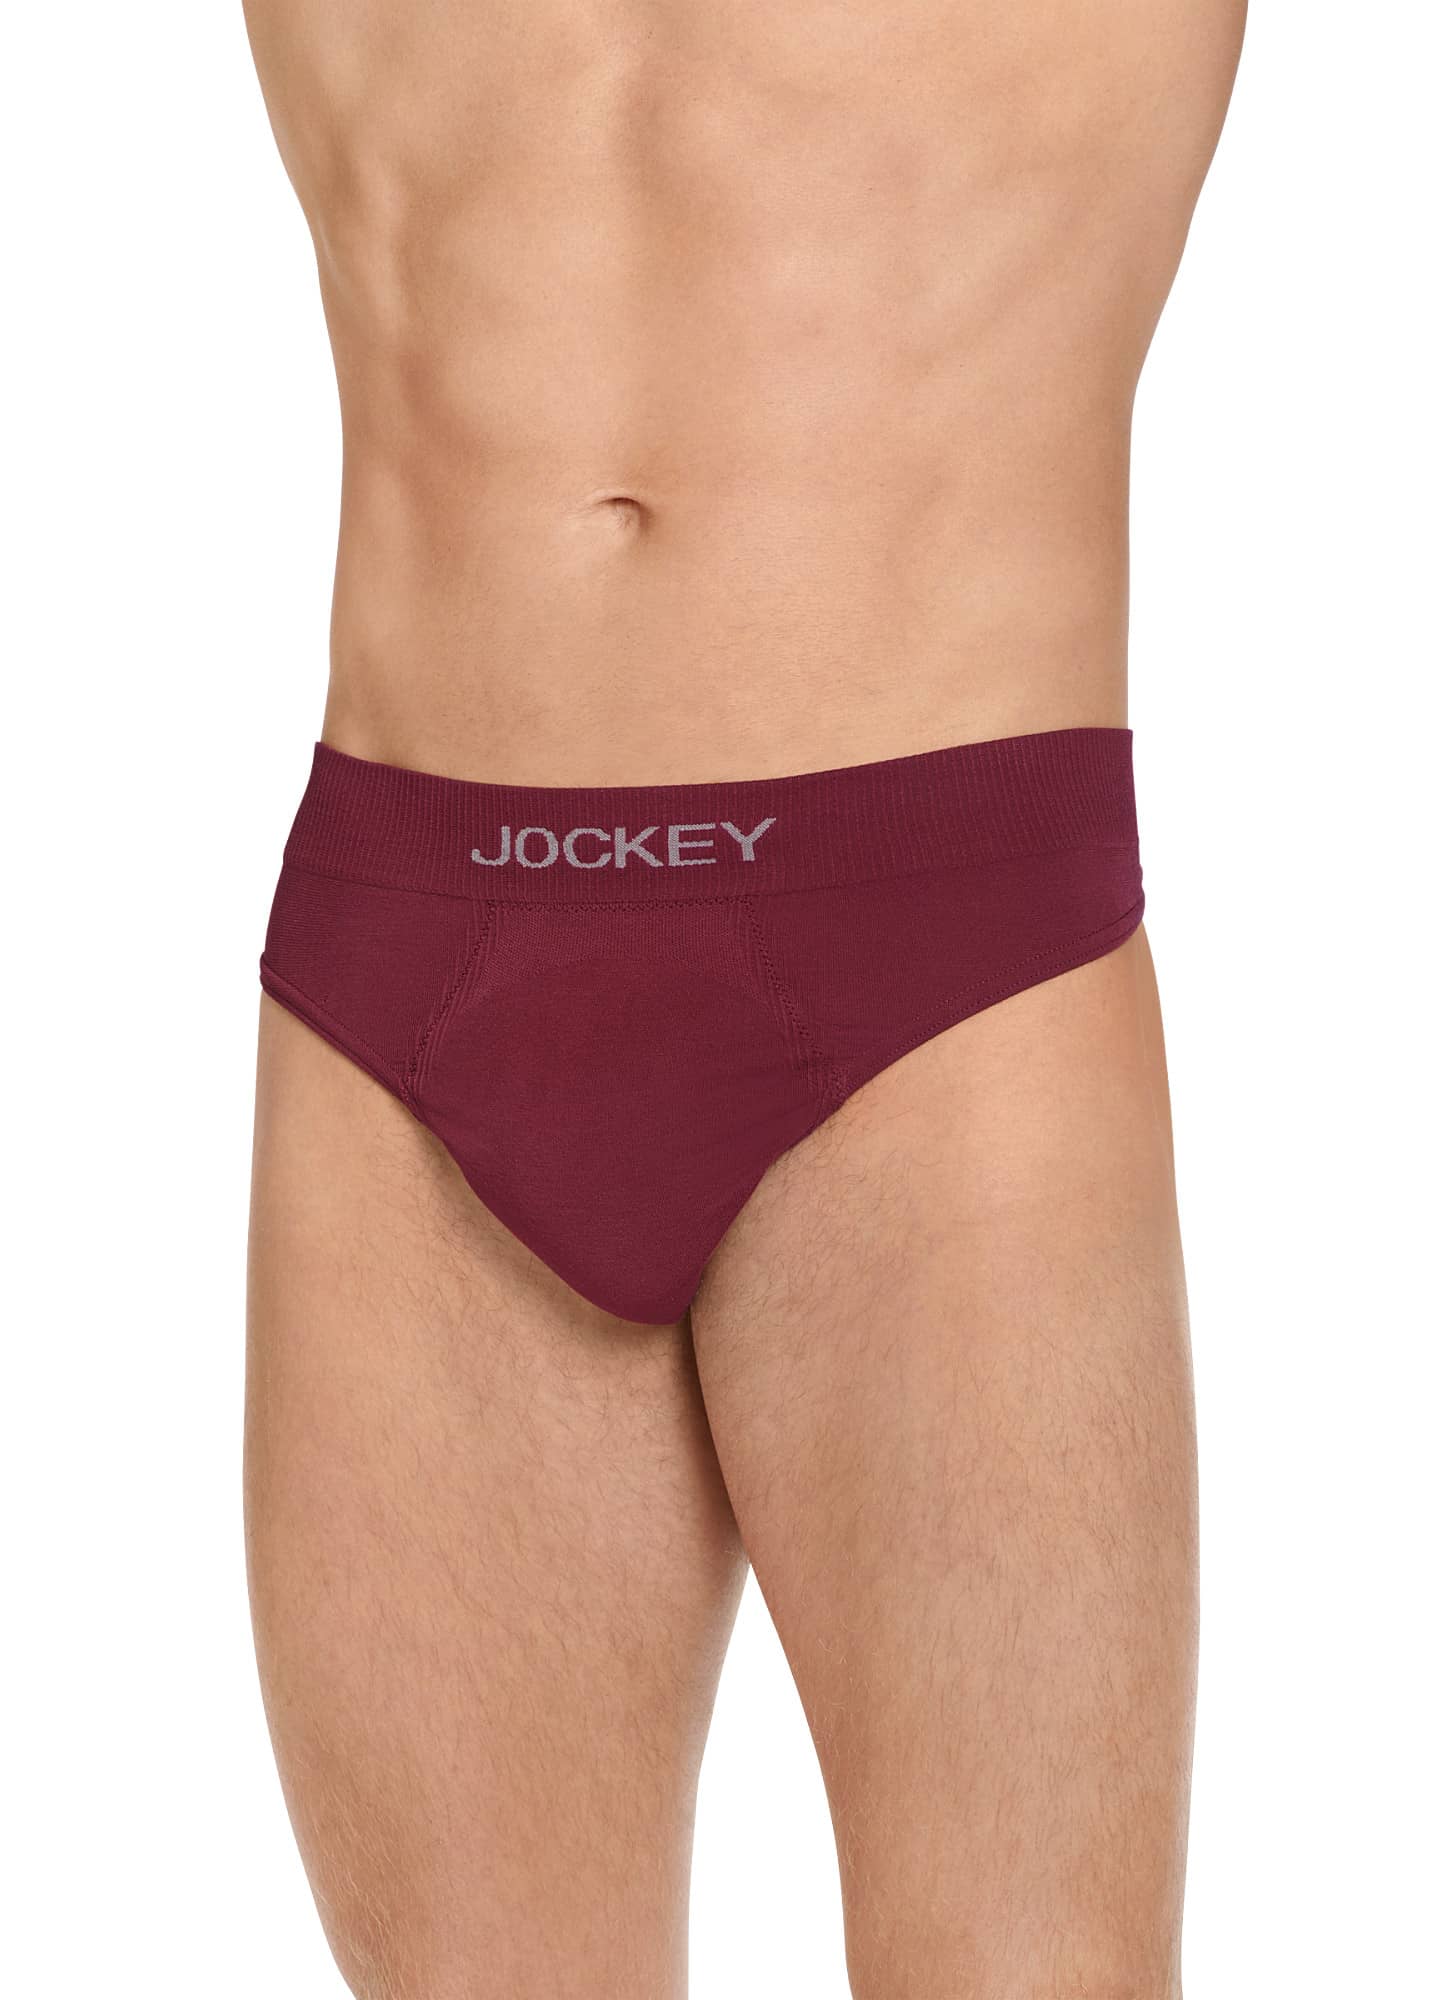 Jockey Men's Underwear FormFit Lightweight Seamfree Bikini, Black